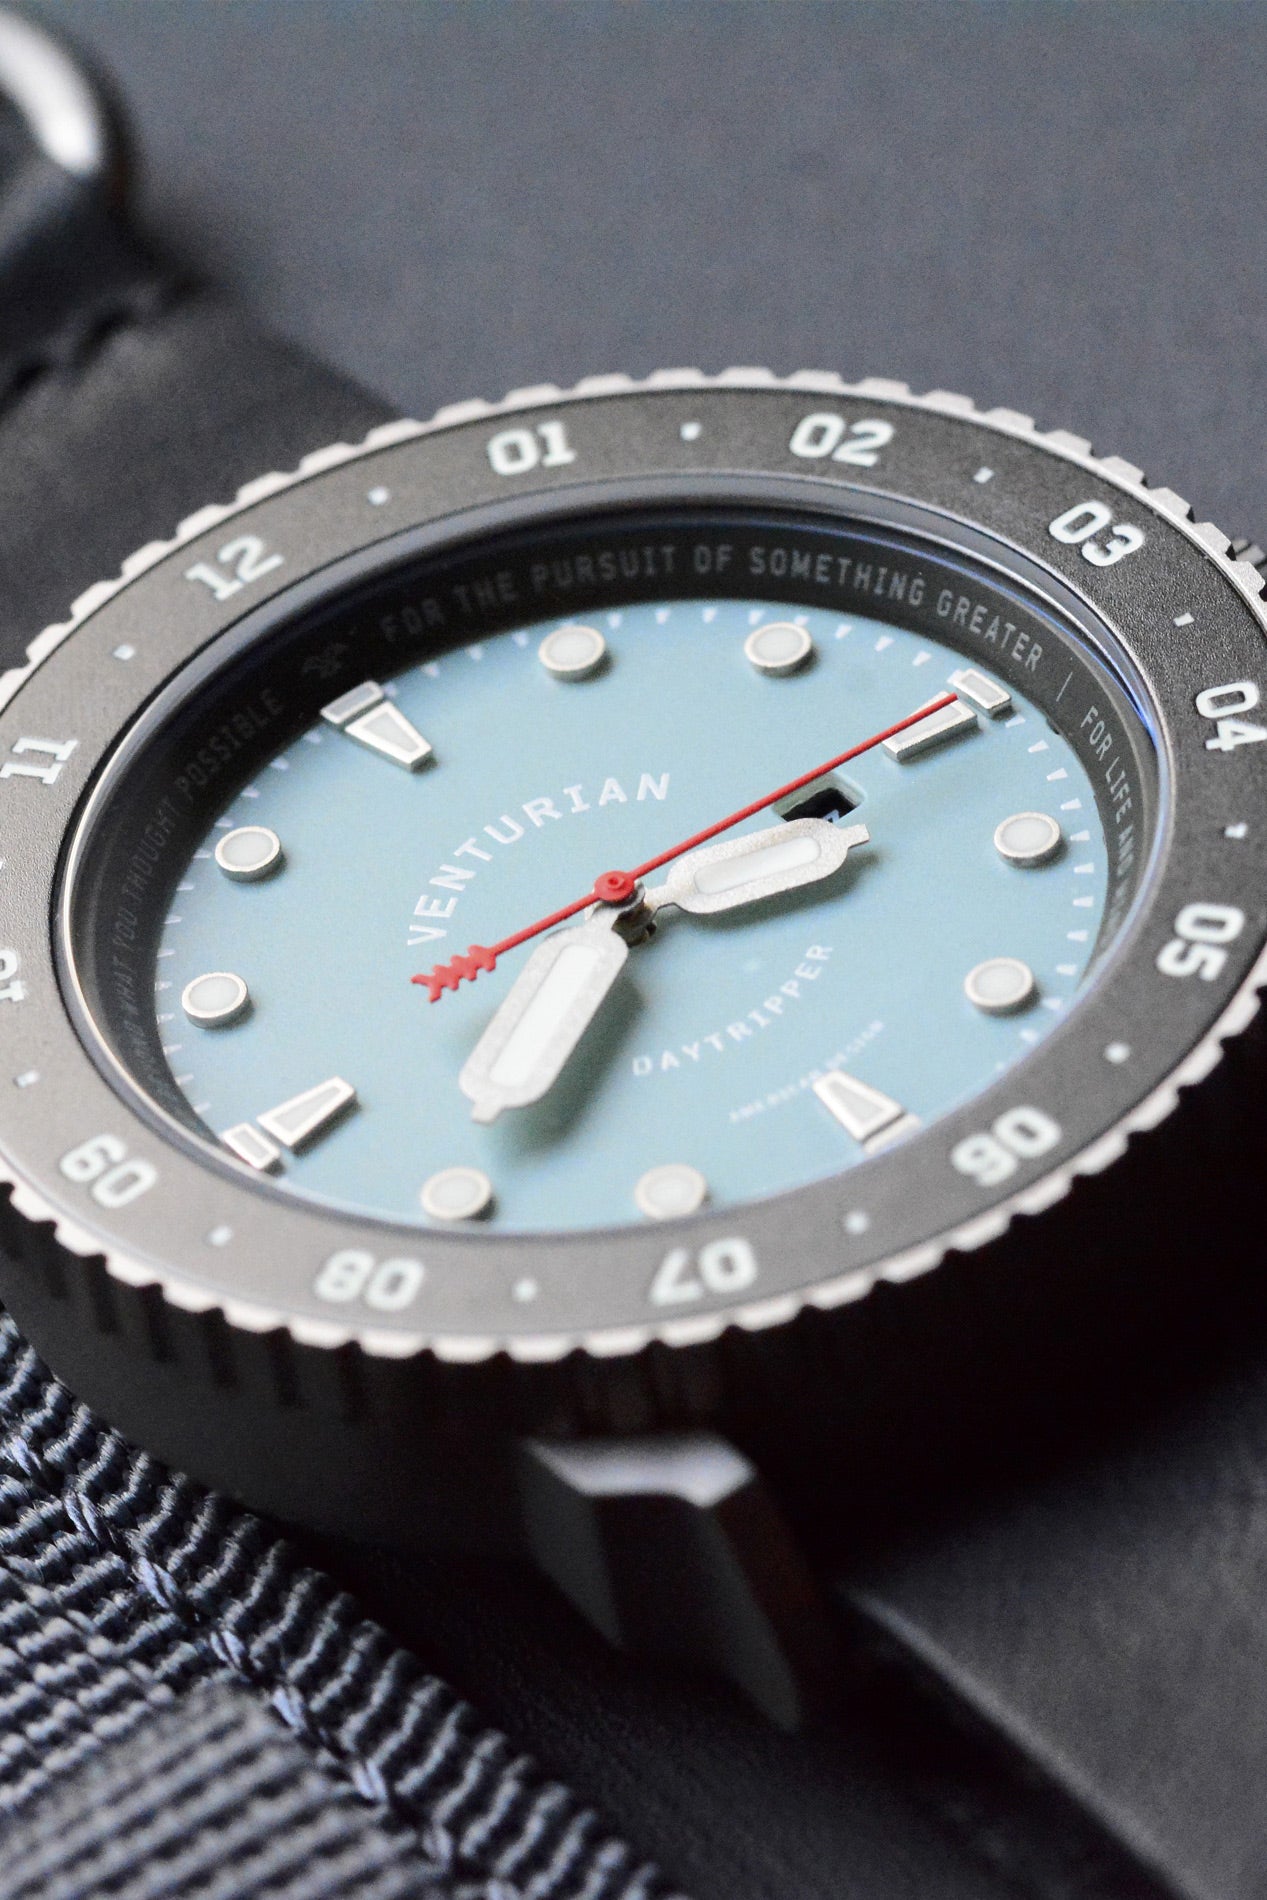 Venturian WatchWorks blue dial Daytripper 38mm solar titanium mens watch. Comes on a leather watch strap.